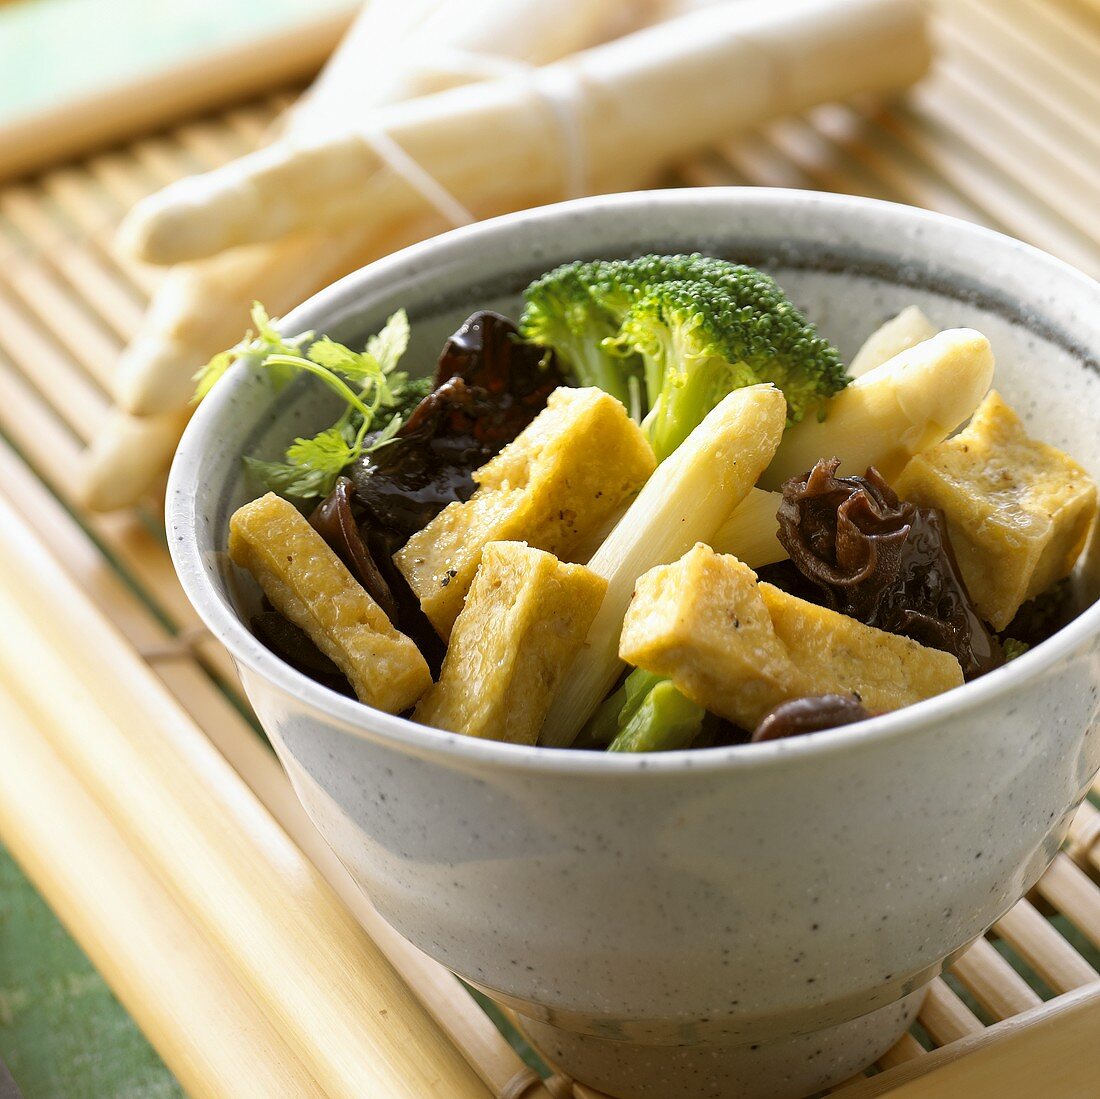 Asparagus with tofu, jelly ear fungus and broccoli (China)